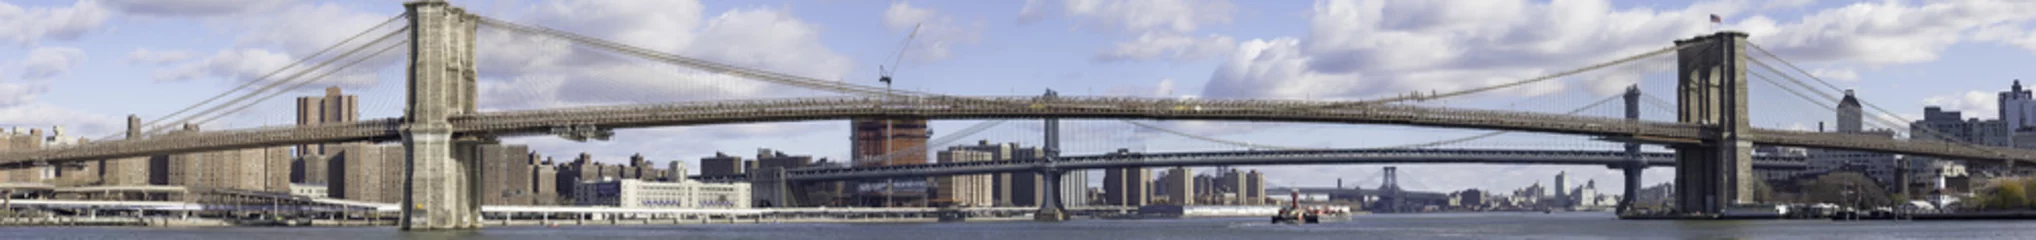 Papier Peint photo Lavable Brooklyn Bridge Brooklyn Bridge, New York